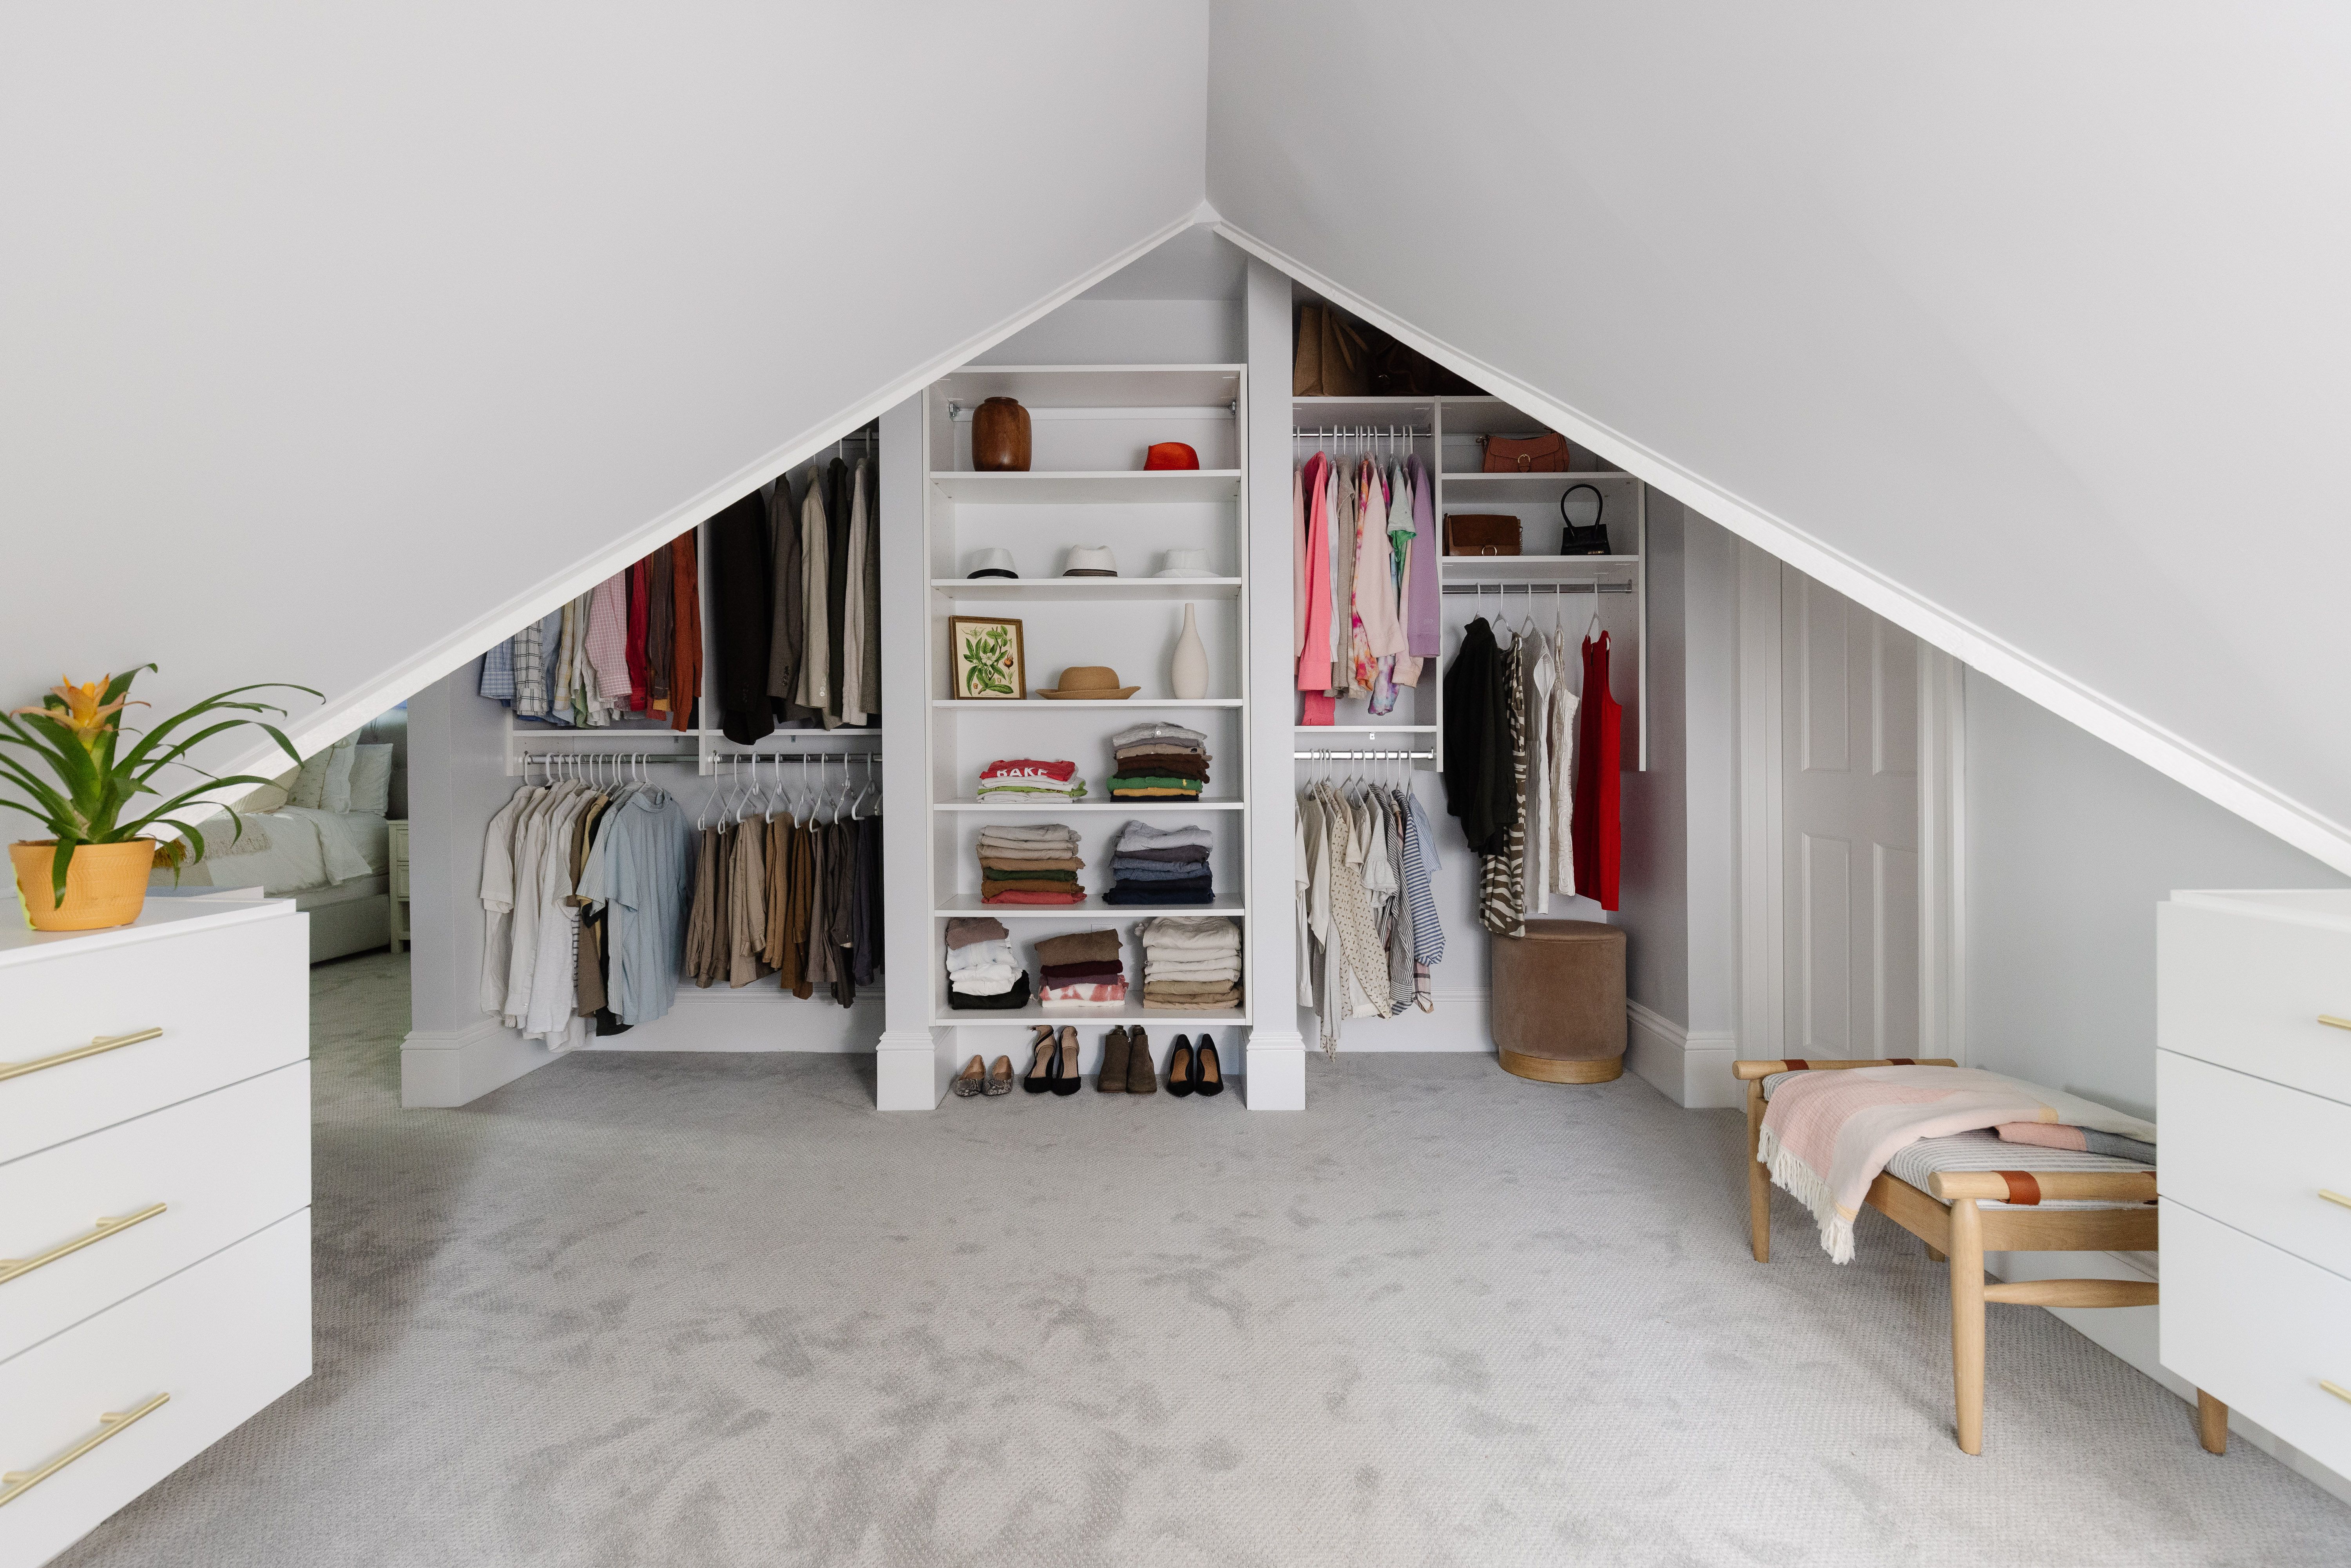 21 Stylish Dressing Room Ideas